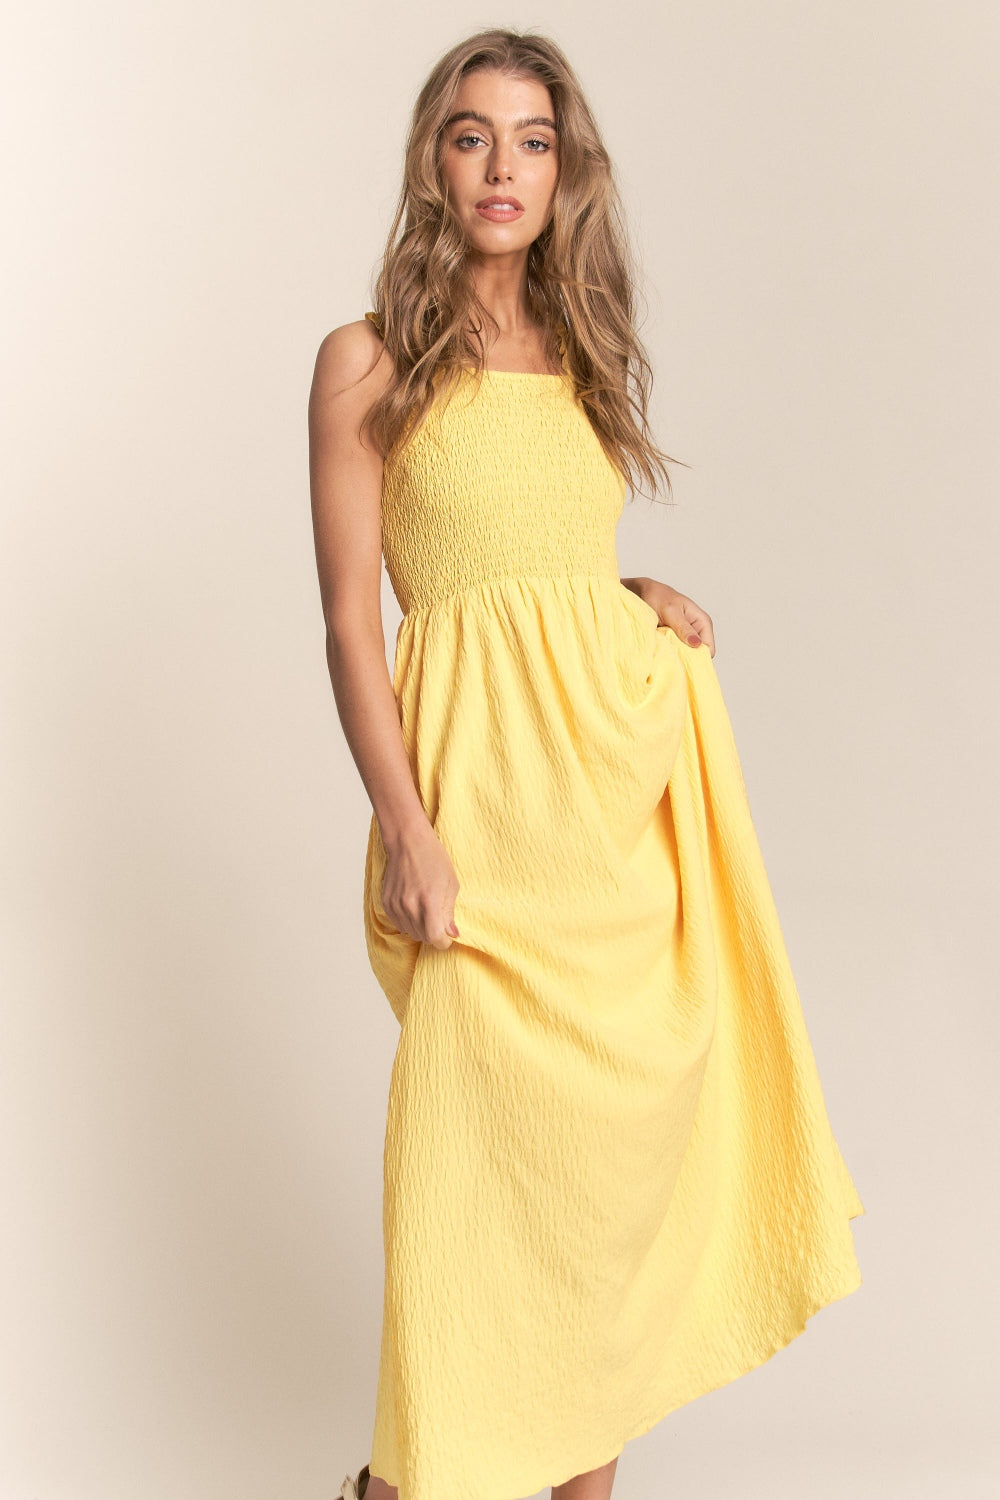 TEEK - Banana Texture Crisscross Back Tie Smocked Maxi Dress DRESS TEEK Trend   